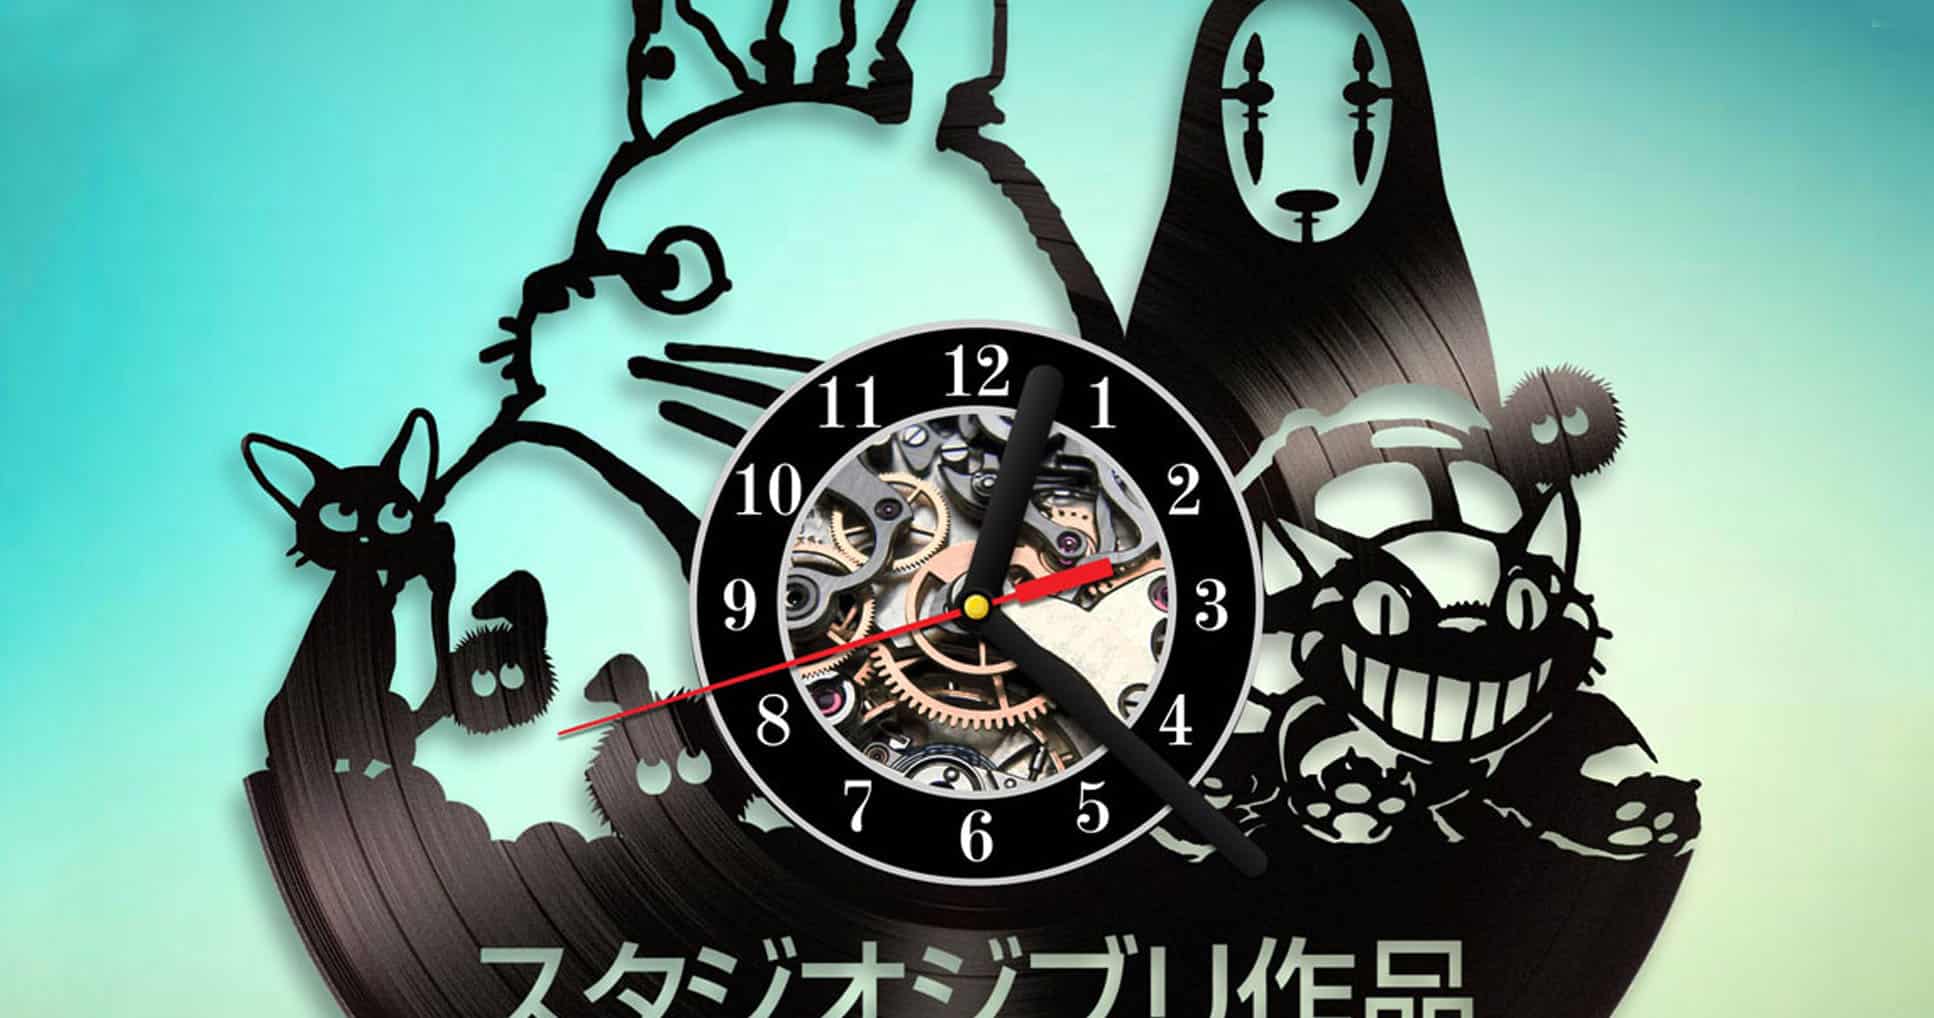 Studio Ghibli Vinyl Clock Record Wall Clock Decor Fan Art Home 3428 